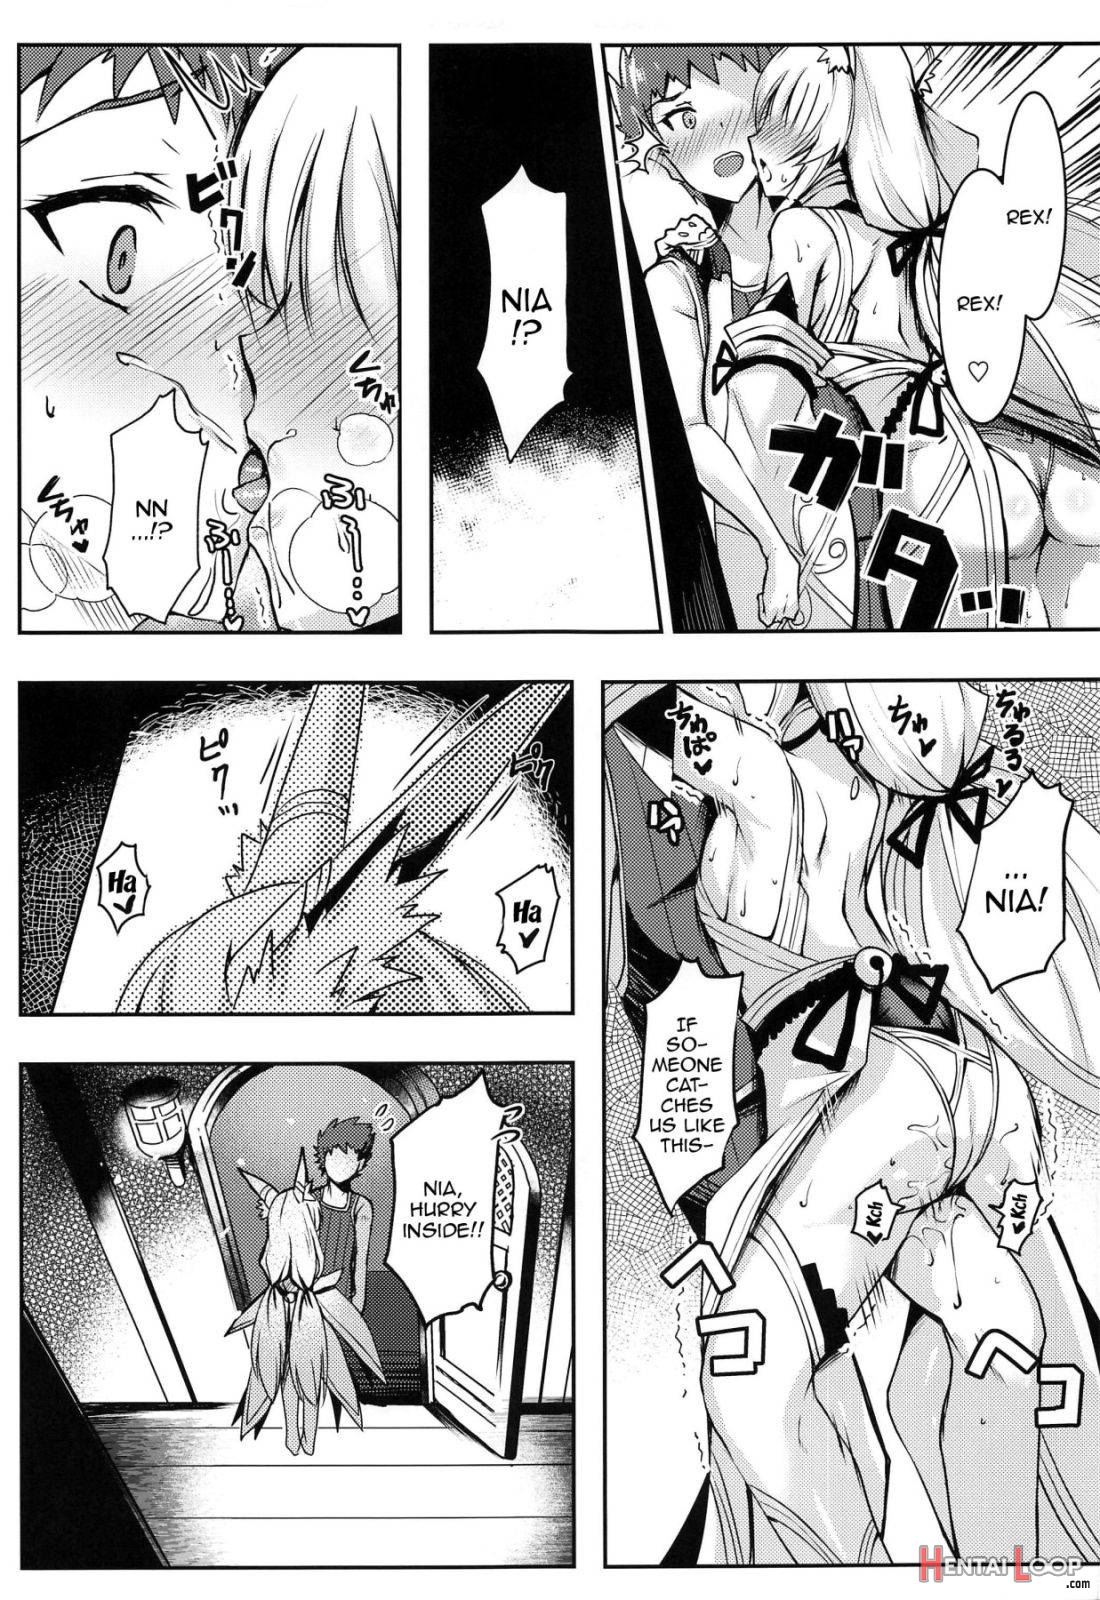 Nia-chan no Ecchi Hon page 4